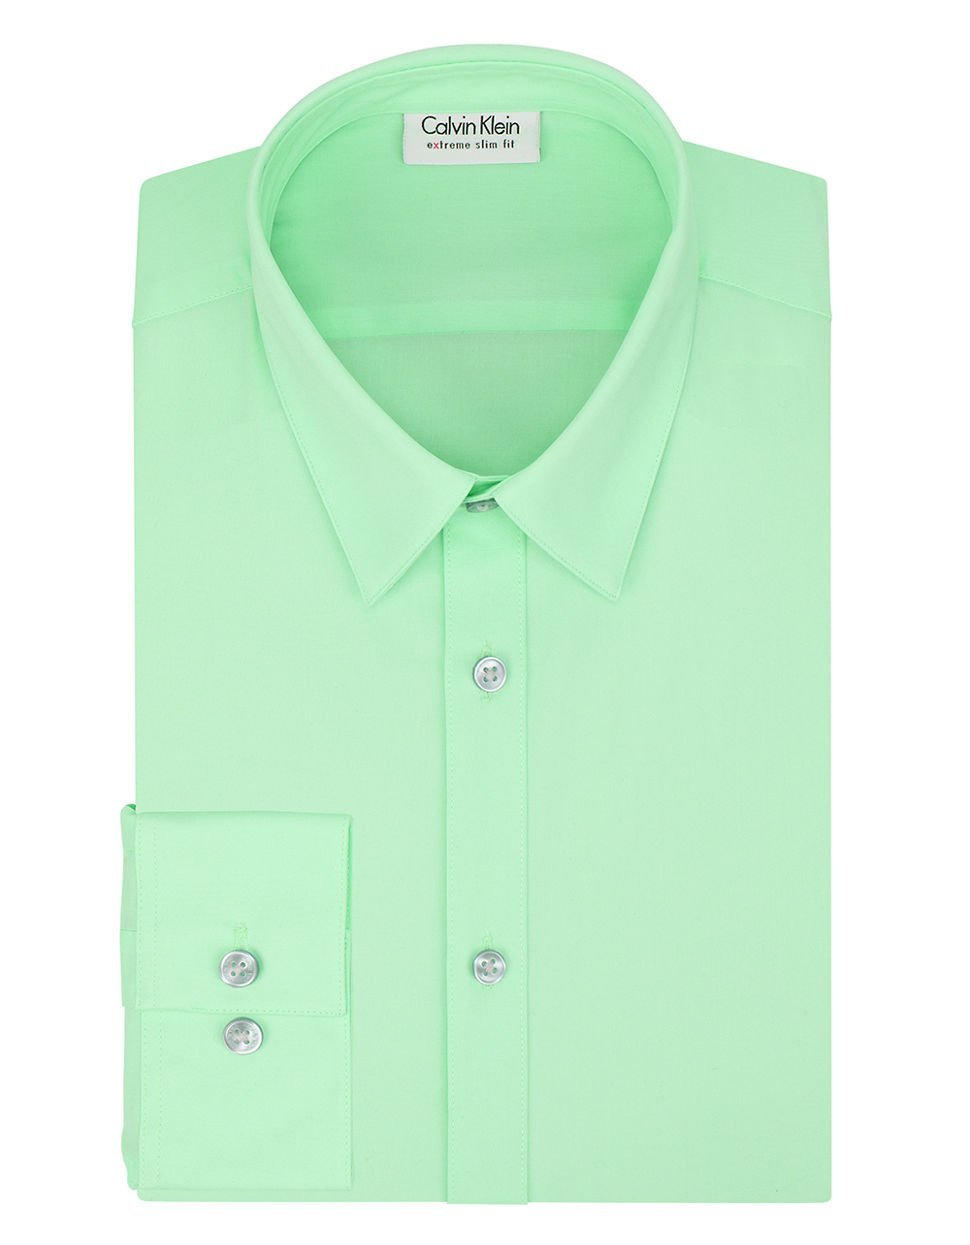 Lyst Calvin Klein Slim Fit Dress Shirt In Green For Men